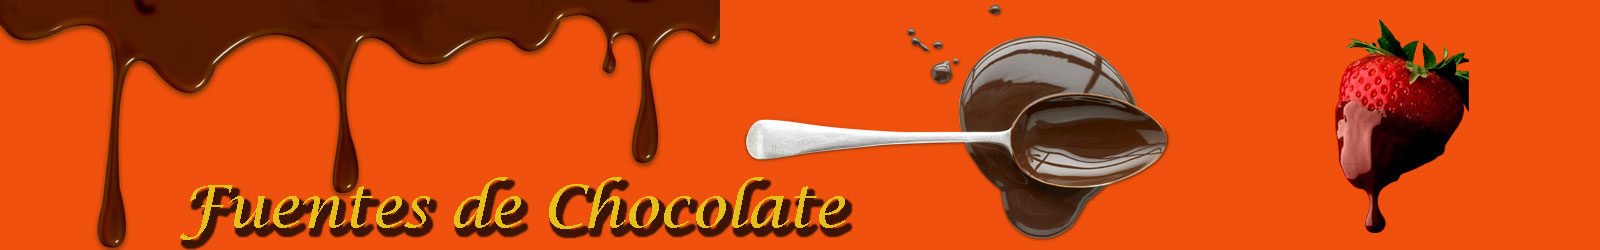 Alquiler fuentes de chocolate